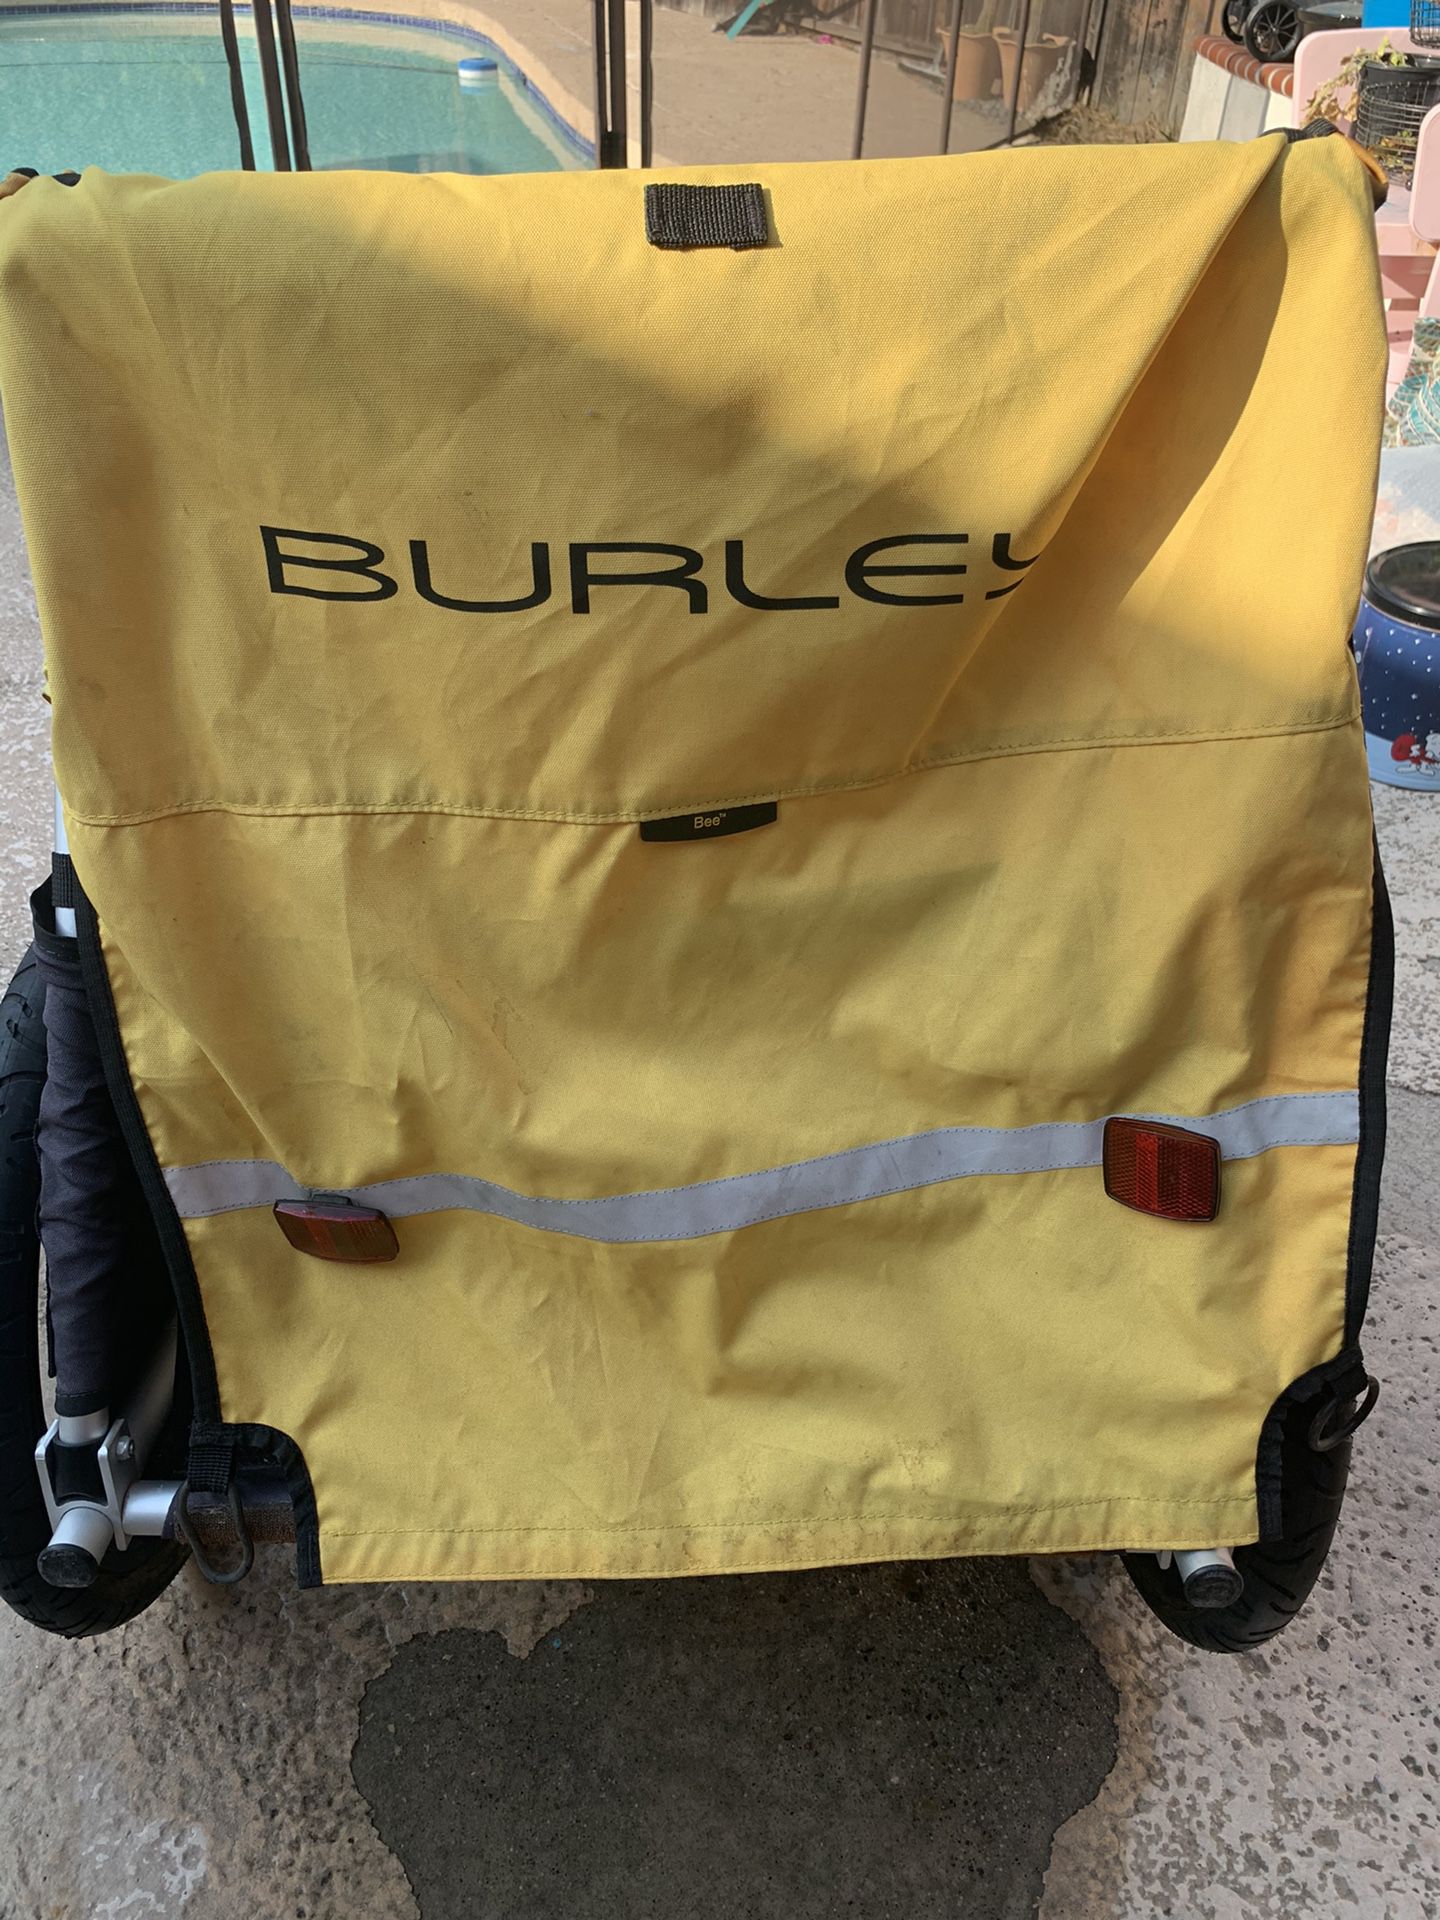 Burley bike carrier/trailer